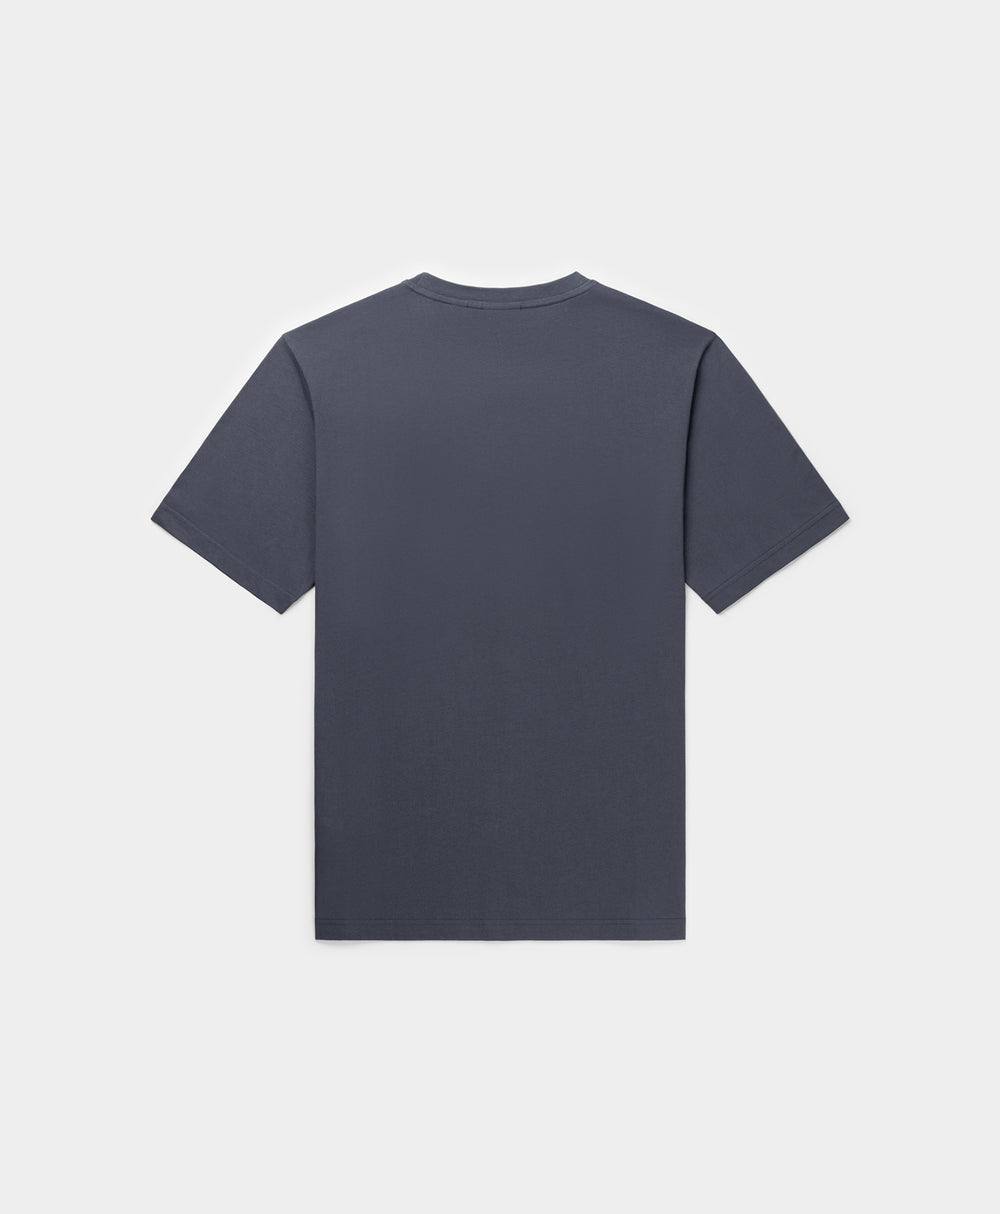 DP - Odyssey Blue Alias T-Shirt - Packshot - Rear